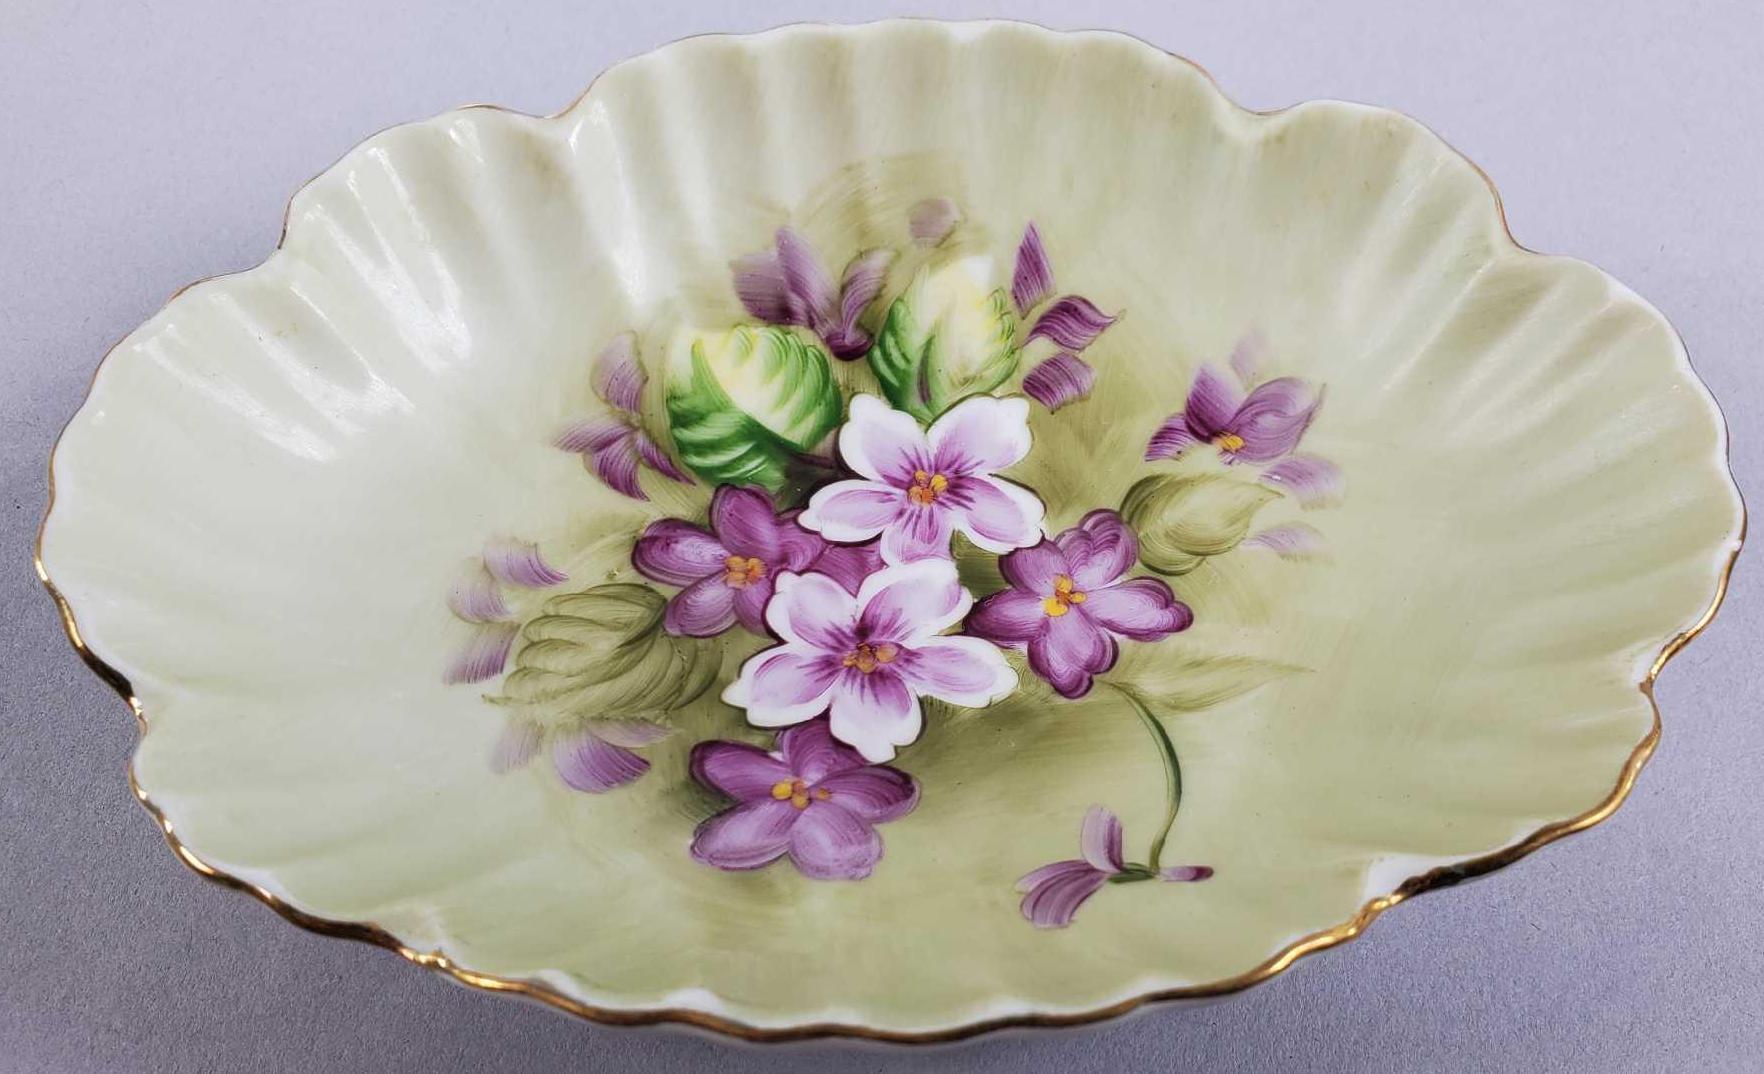 Large Lot of Violet Patterned Porcelain - Approx. 19 pieces